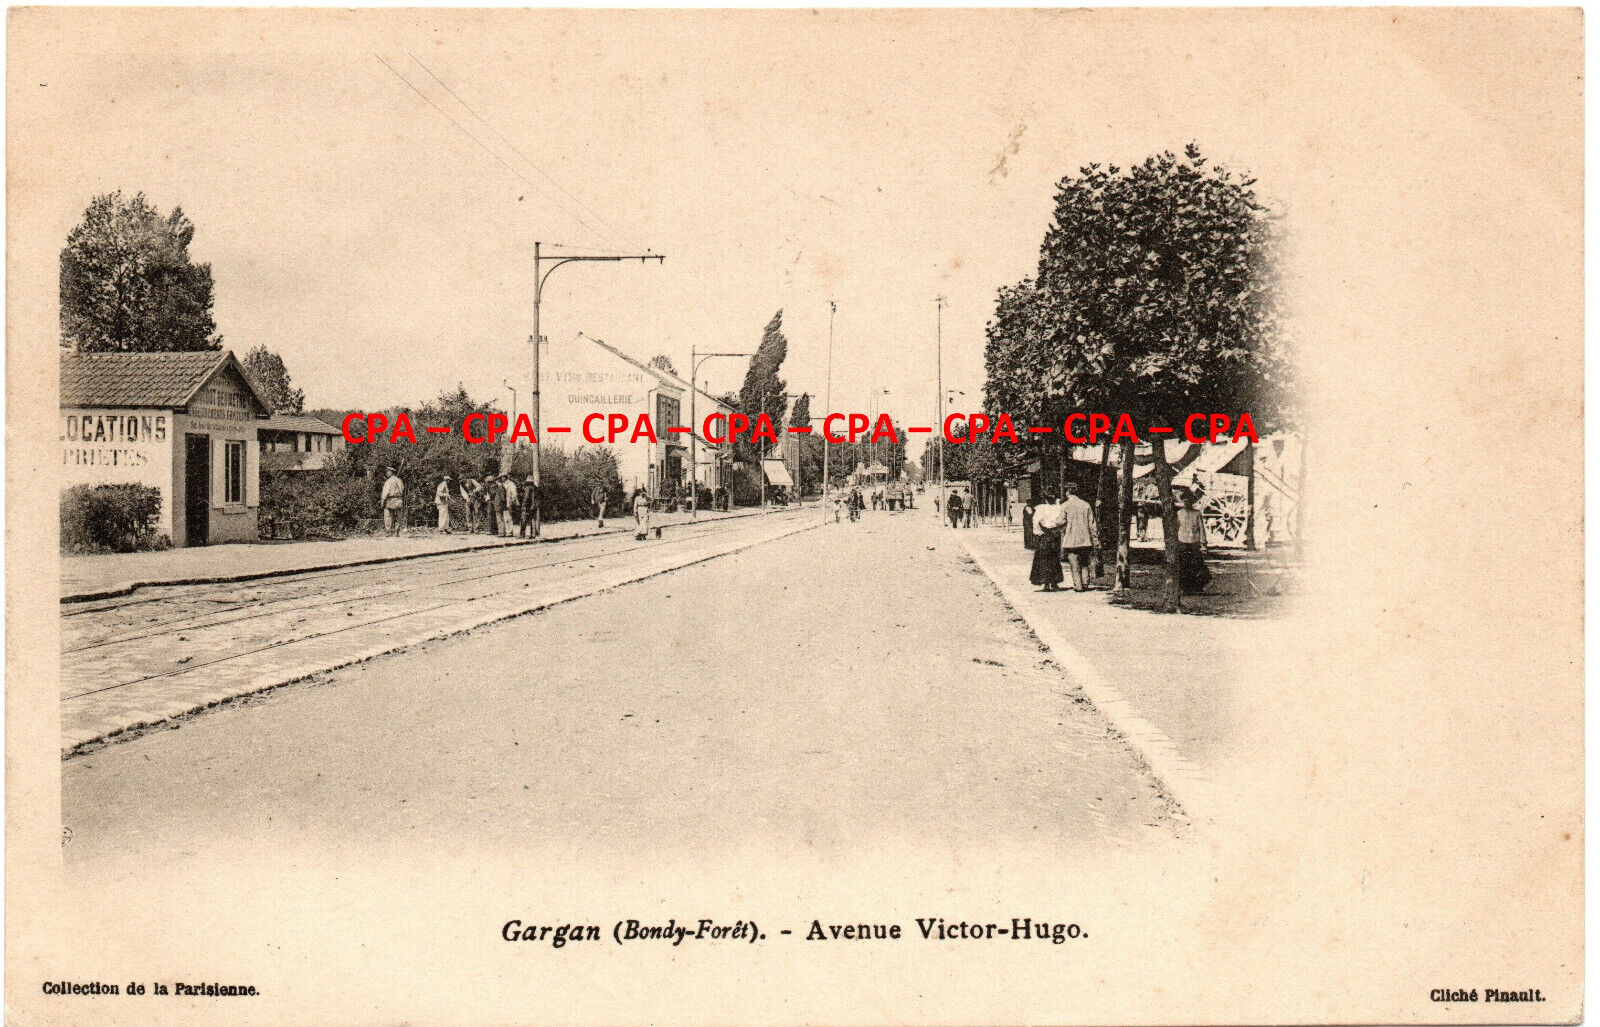 CPA PAVILIONS UNDER WOOD (93) - Bondy Forest, Avenue Victor Hugo - circa 1904